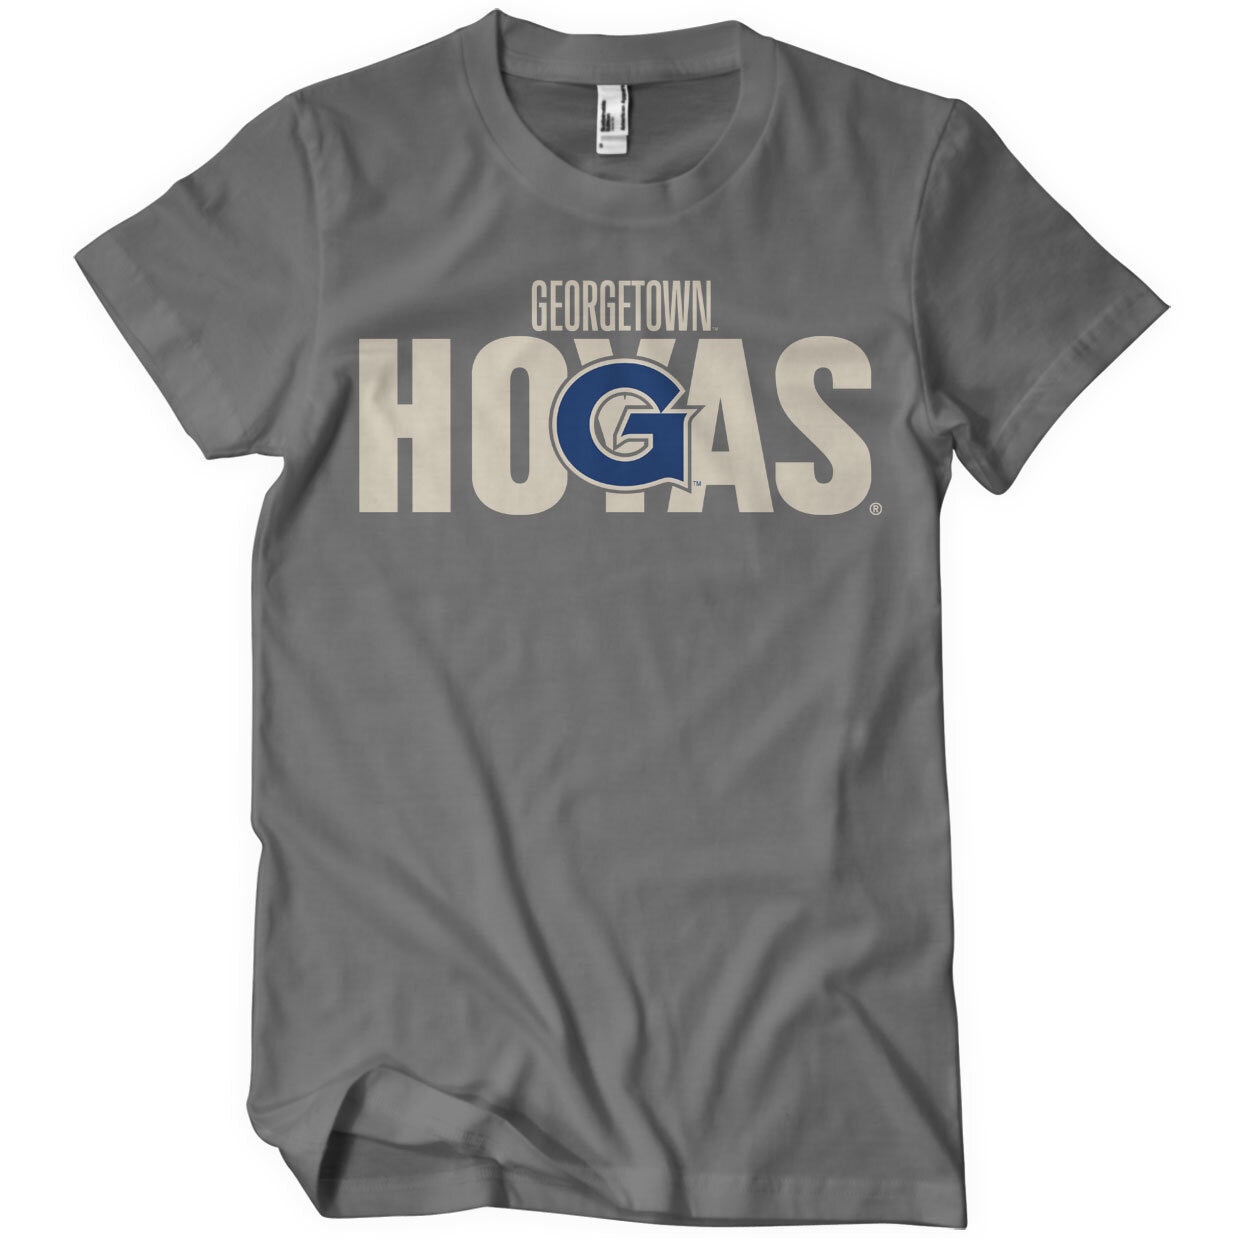 Georgetown Hoyas T-Shirt